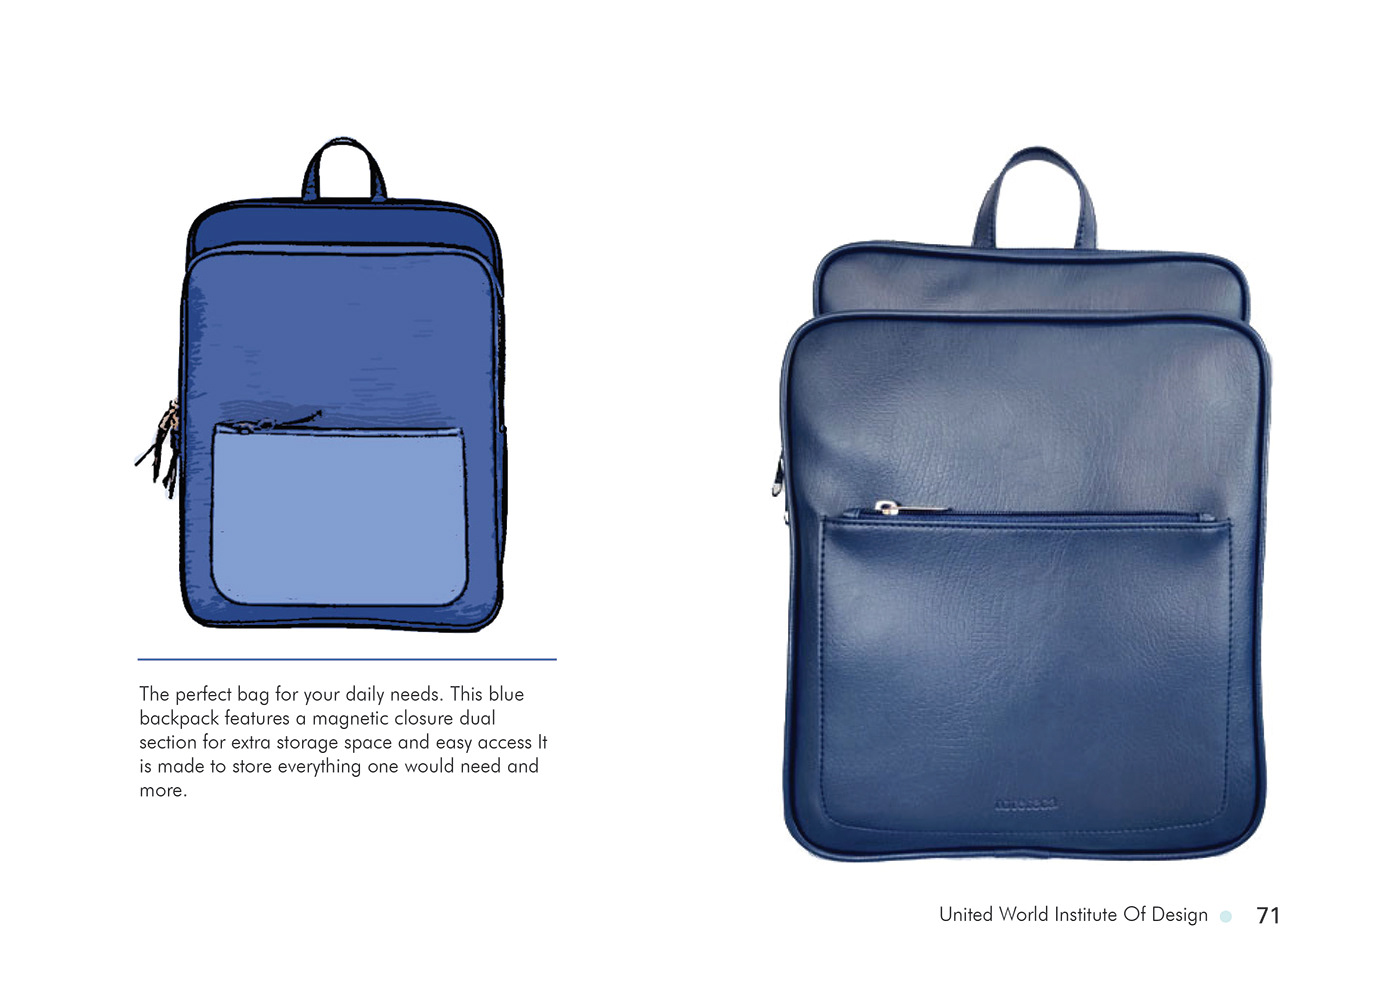 Image may contain: luggage and bags, handbag and bag